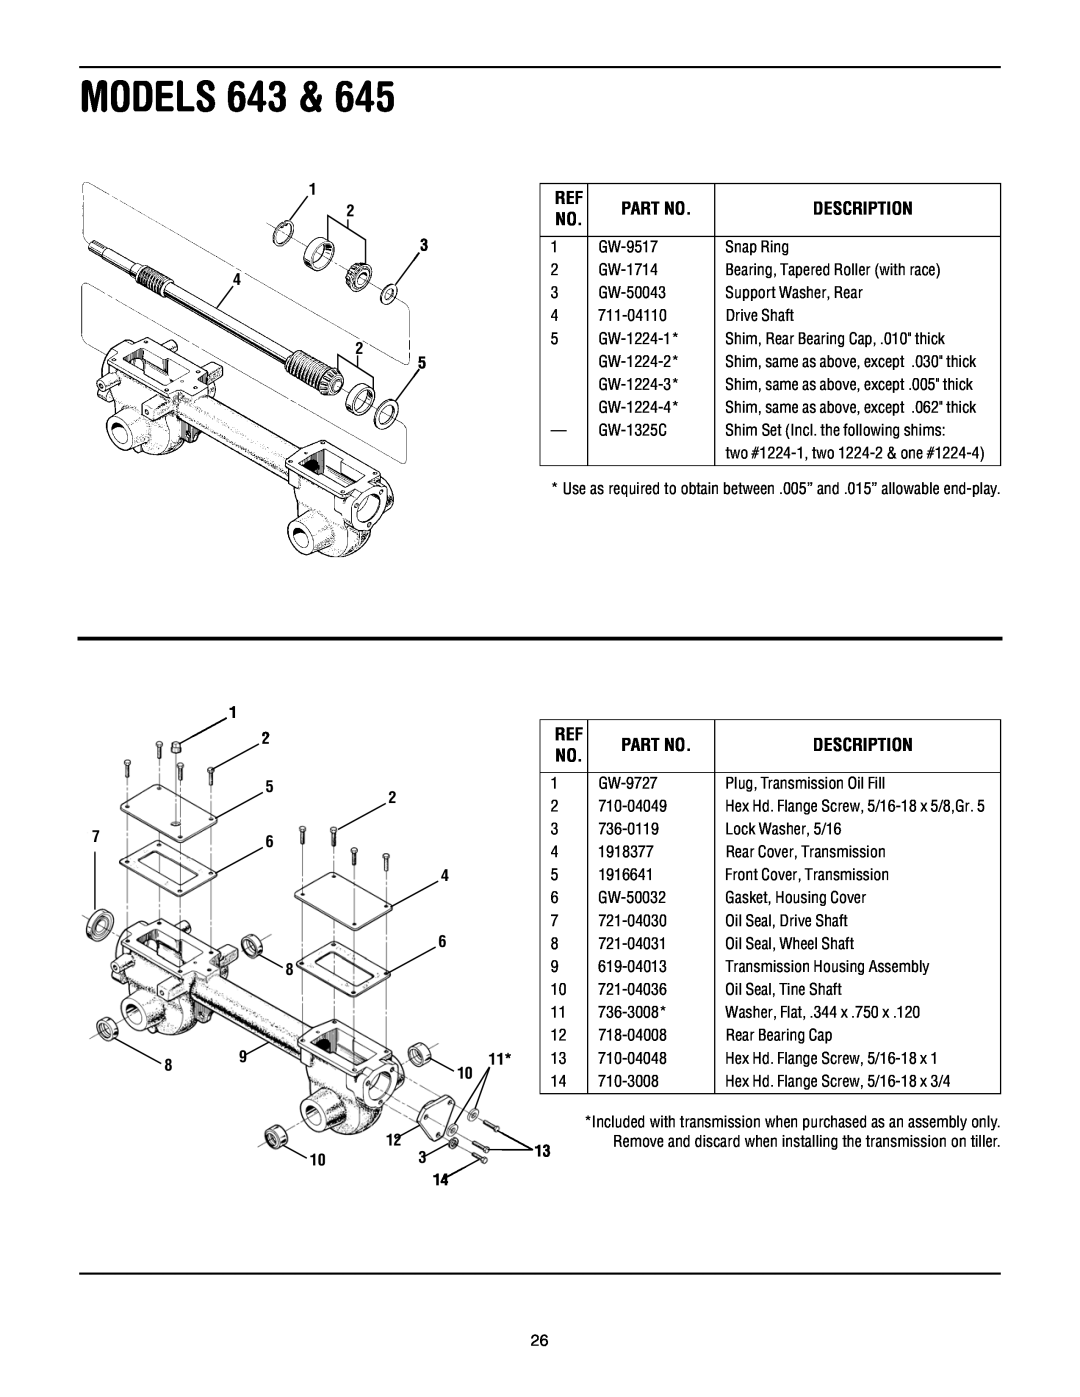 Troy-Bilt Super Bronco manual MODELS 643, Description, Shim, same as above, except .030 thick, 721-04030 